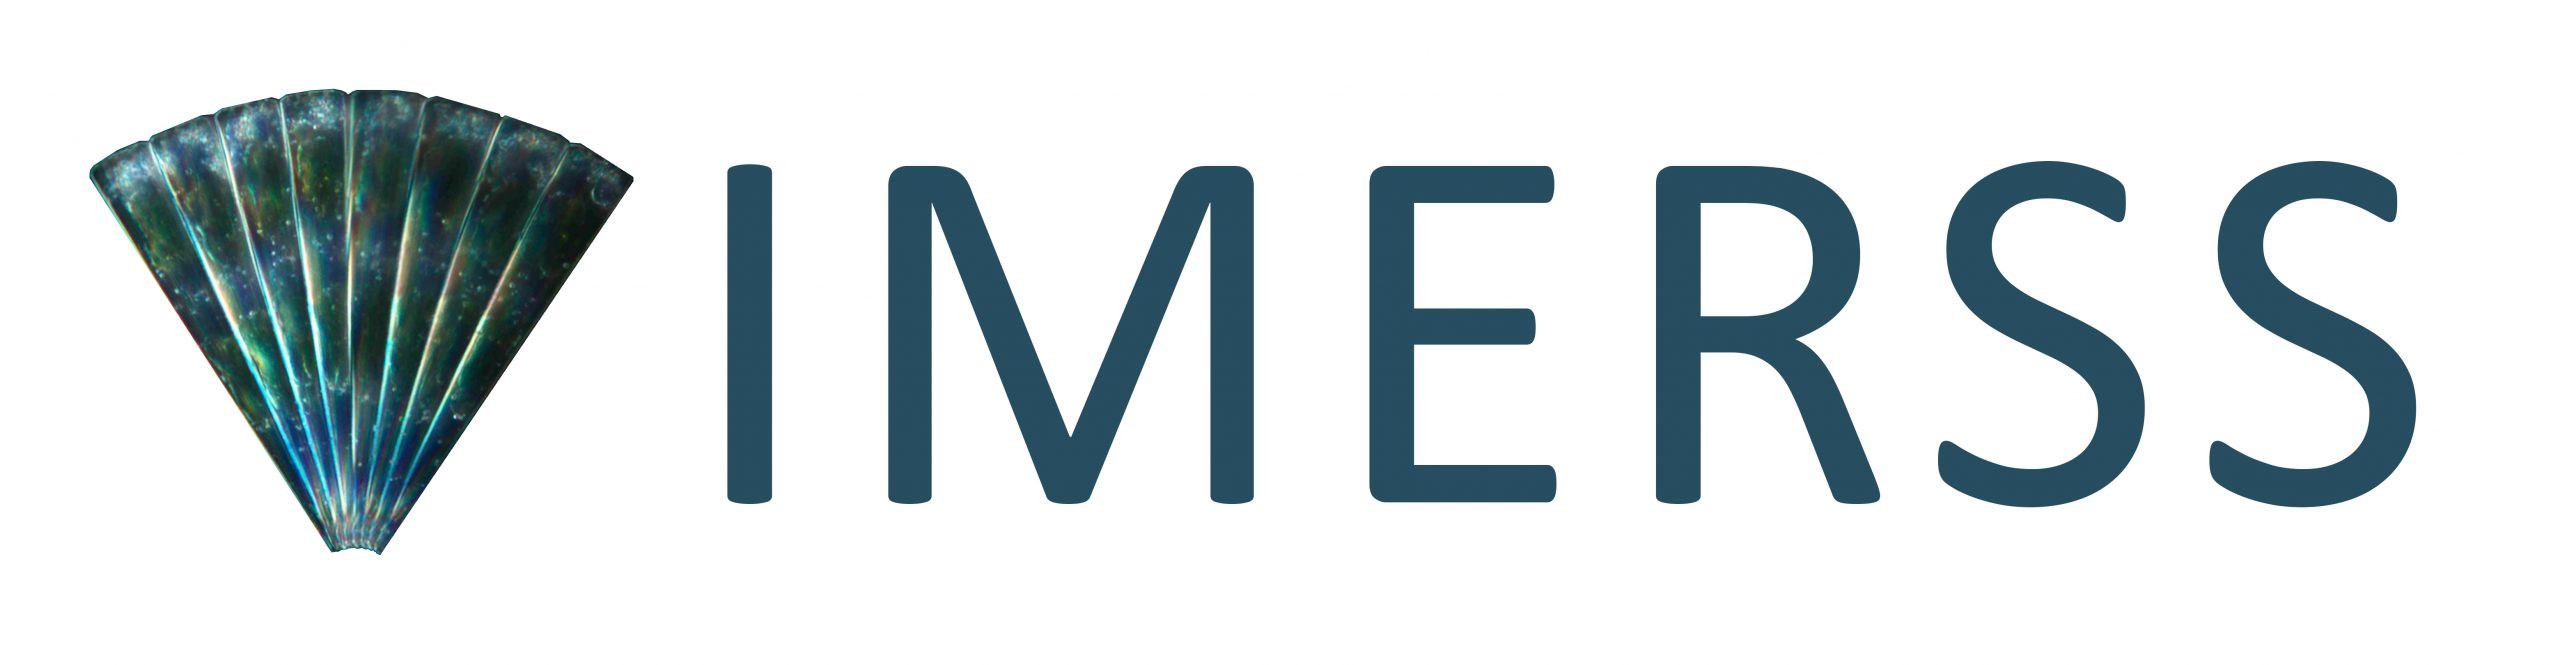 IMERSS Logo